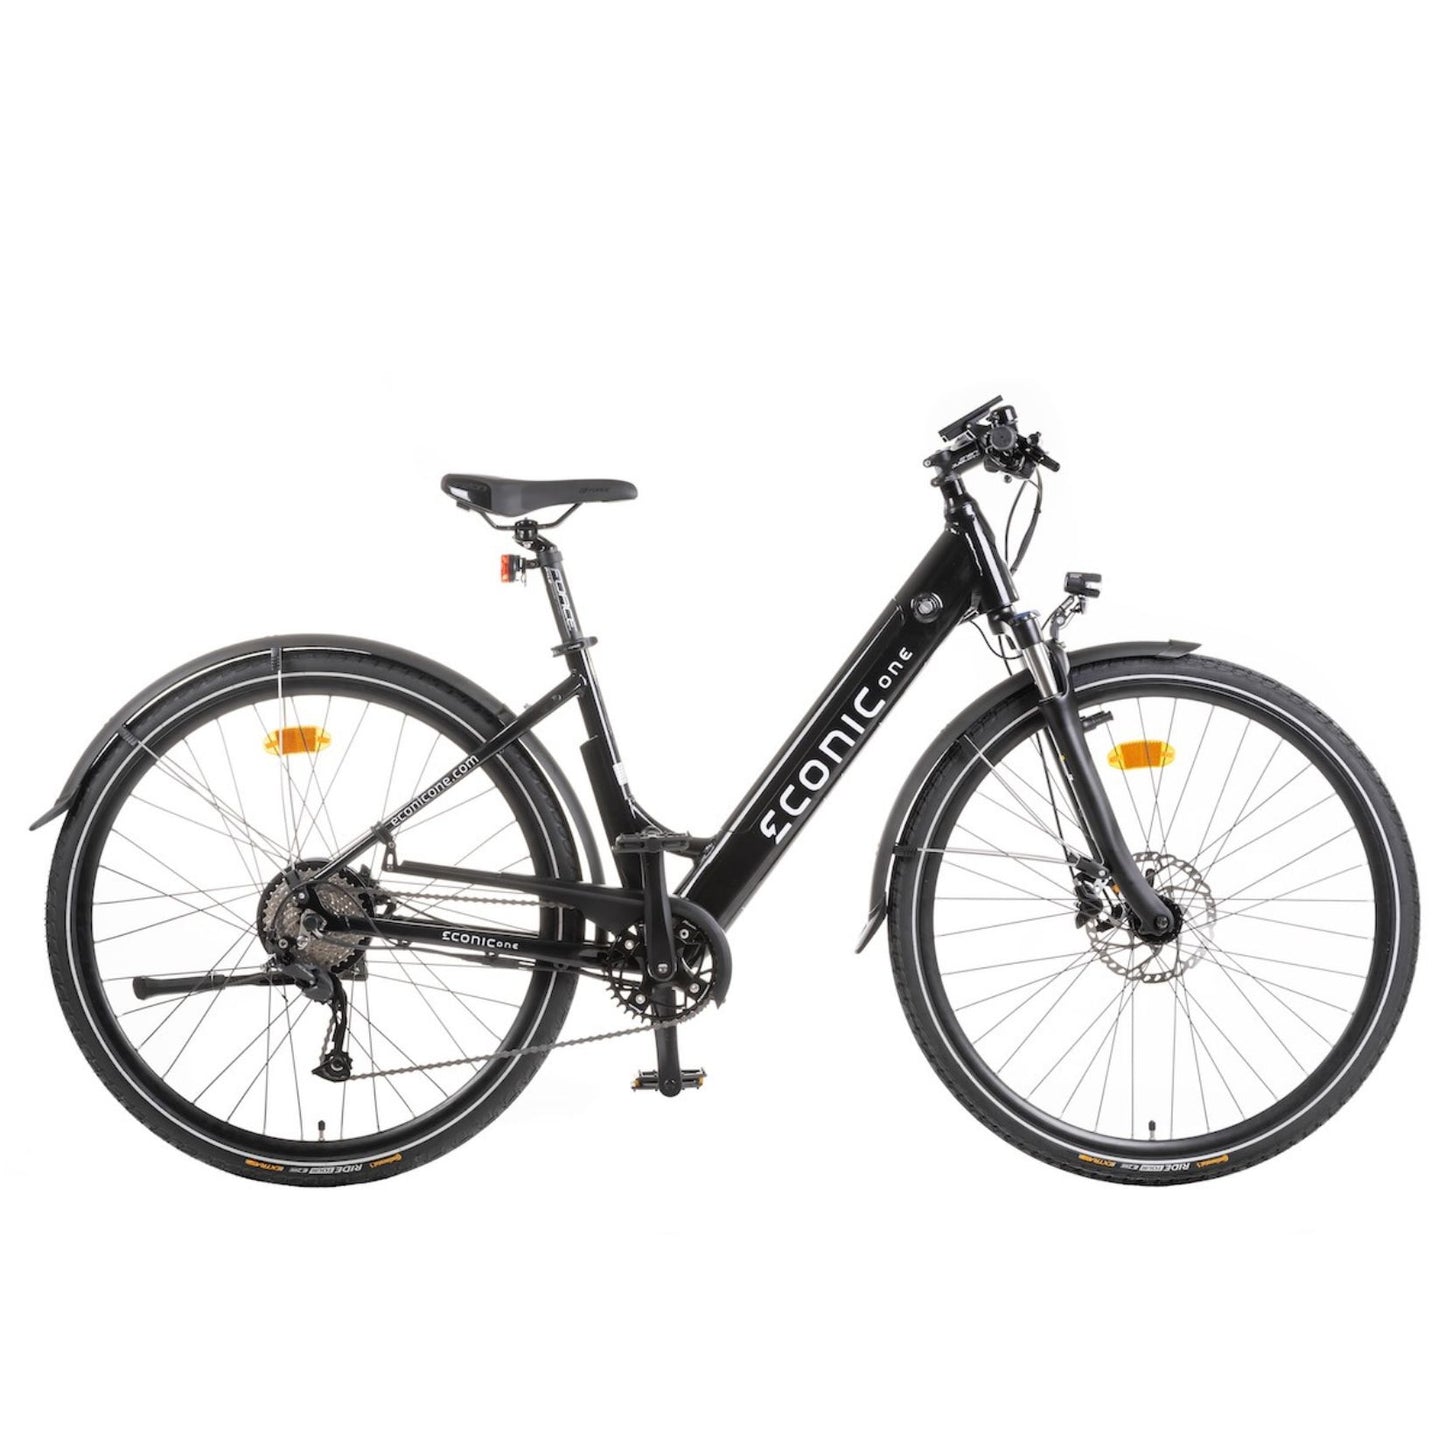 ECONIC ONE Comfort | Commute e-Bike | 100 km